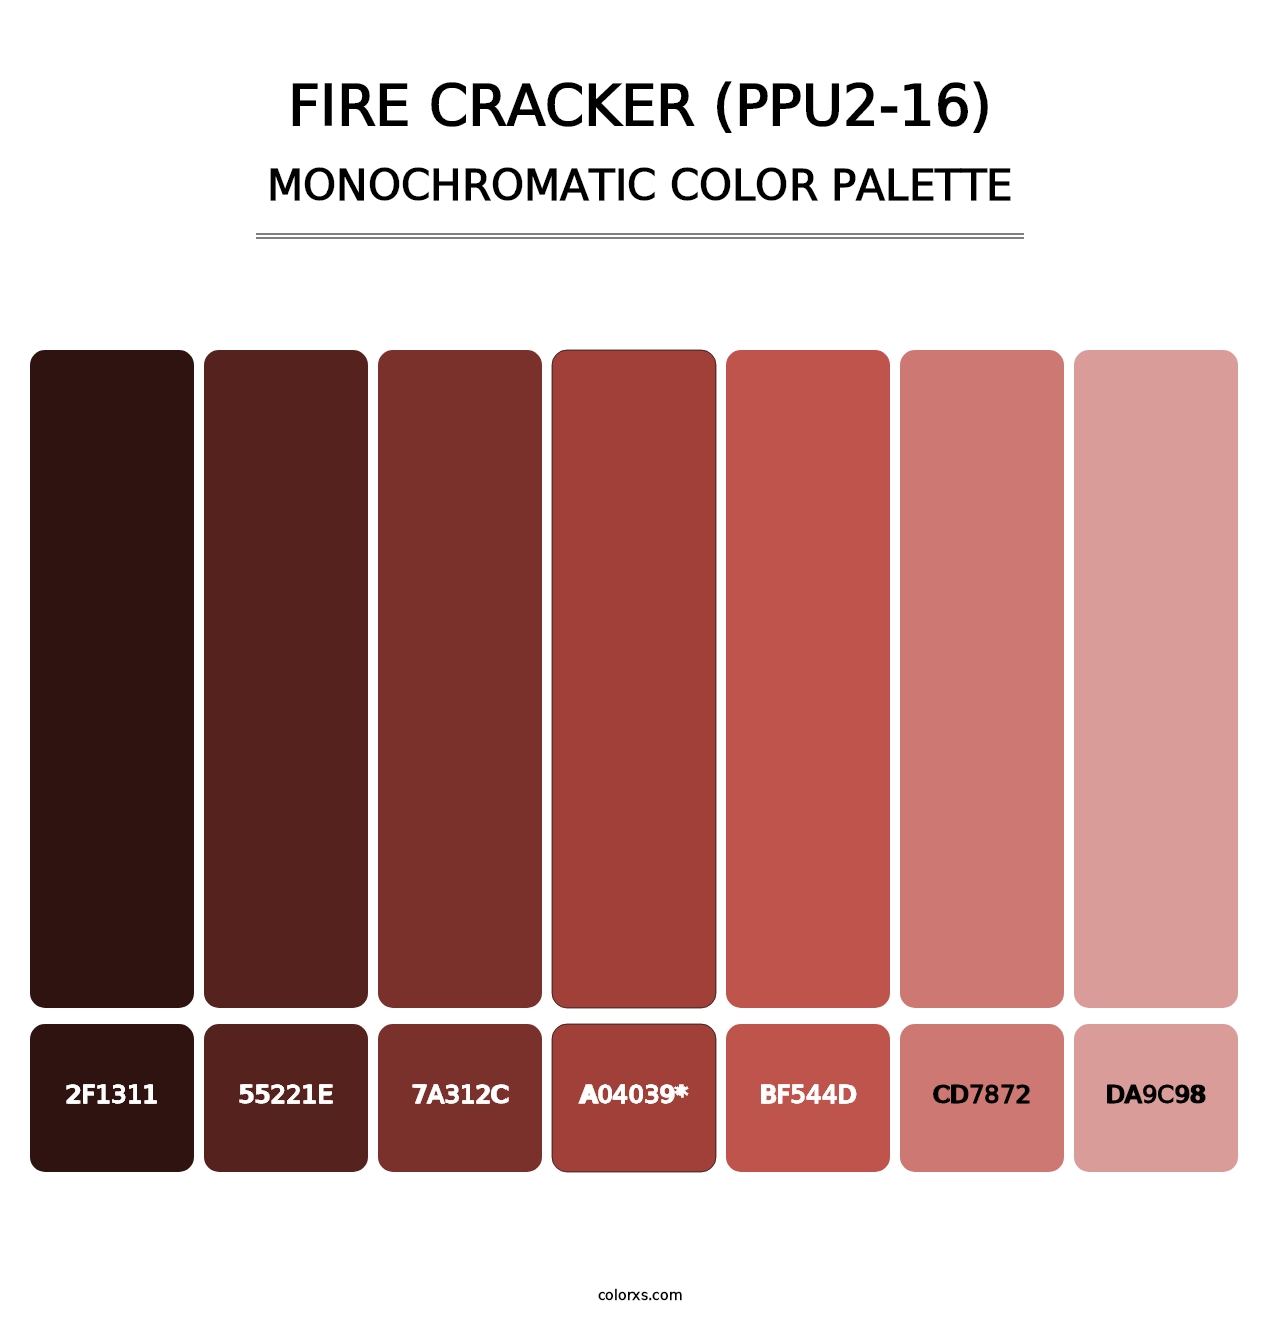 Fire Cracker (PPU2-16) - Monochromatic Color Palette